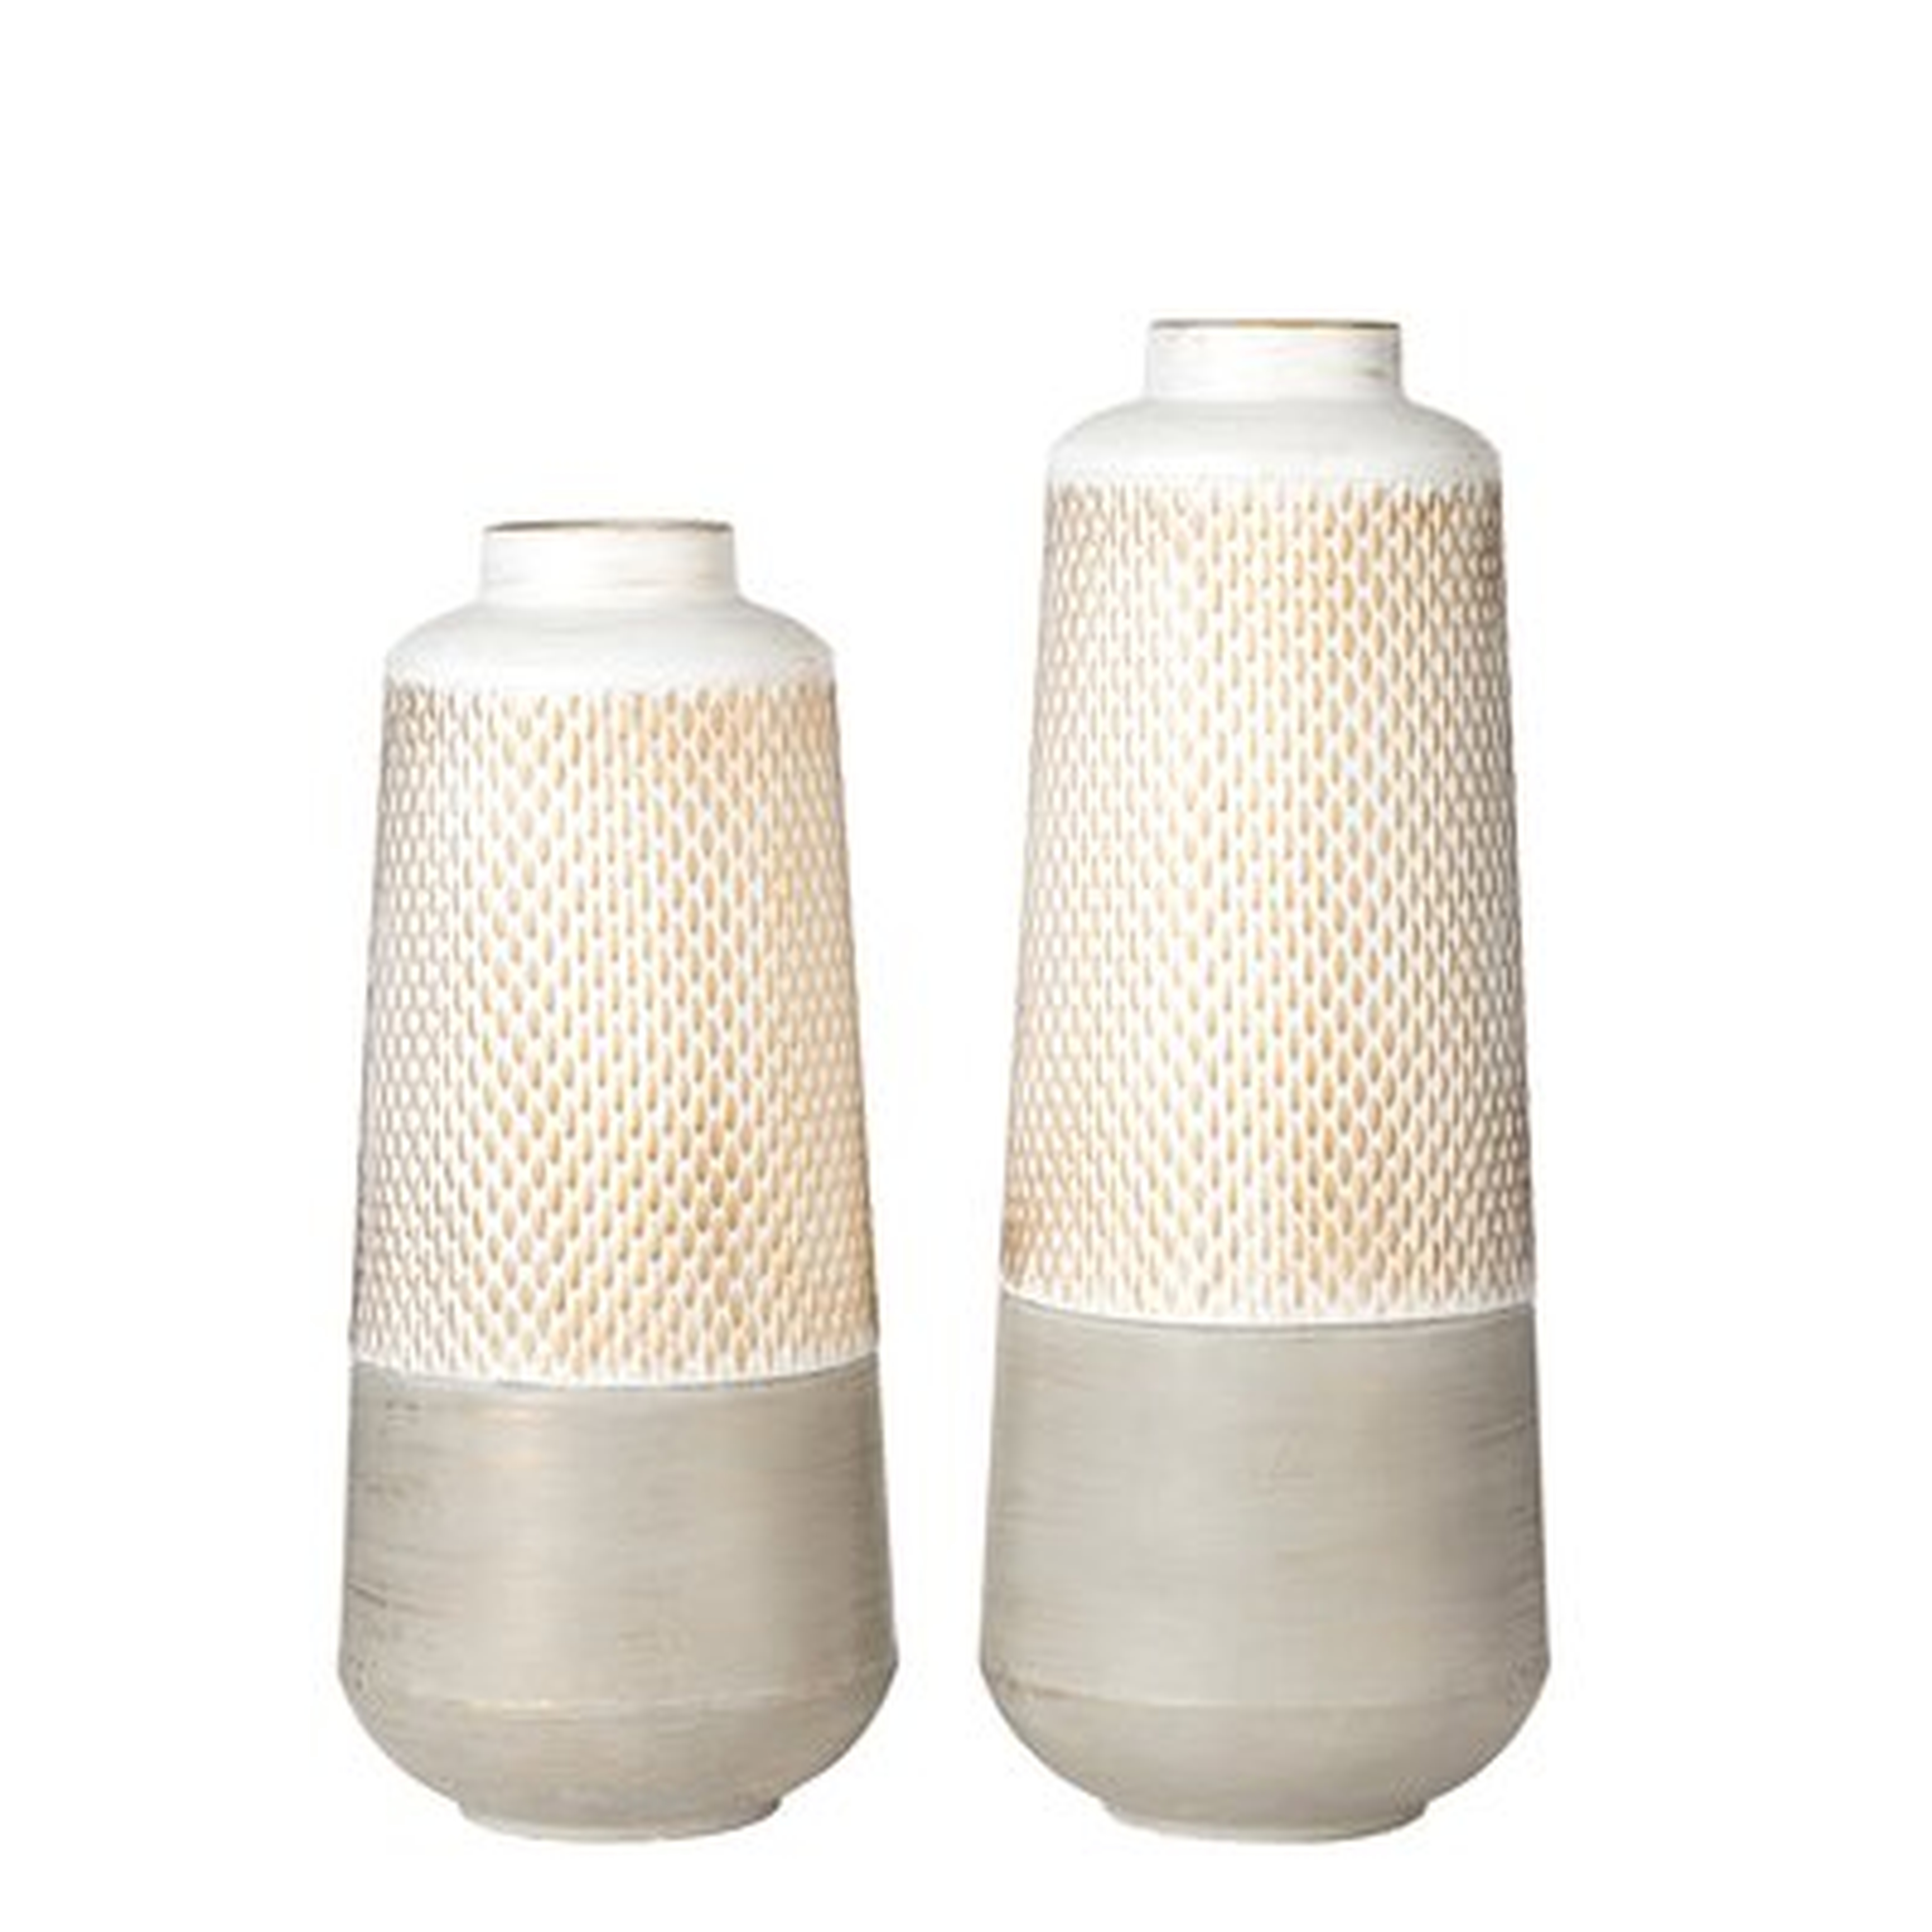 Modern Industrial Textured Metal Floor Vases, Set of 2 - Wayfair